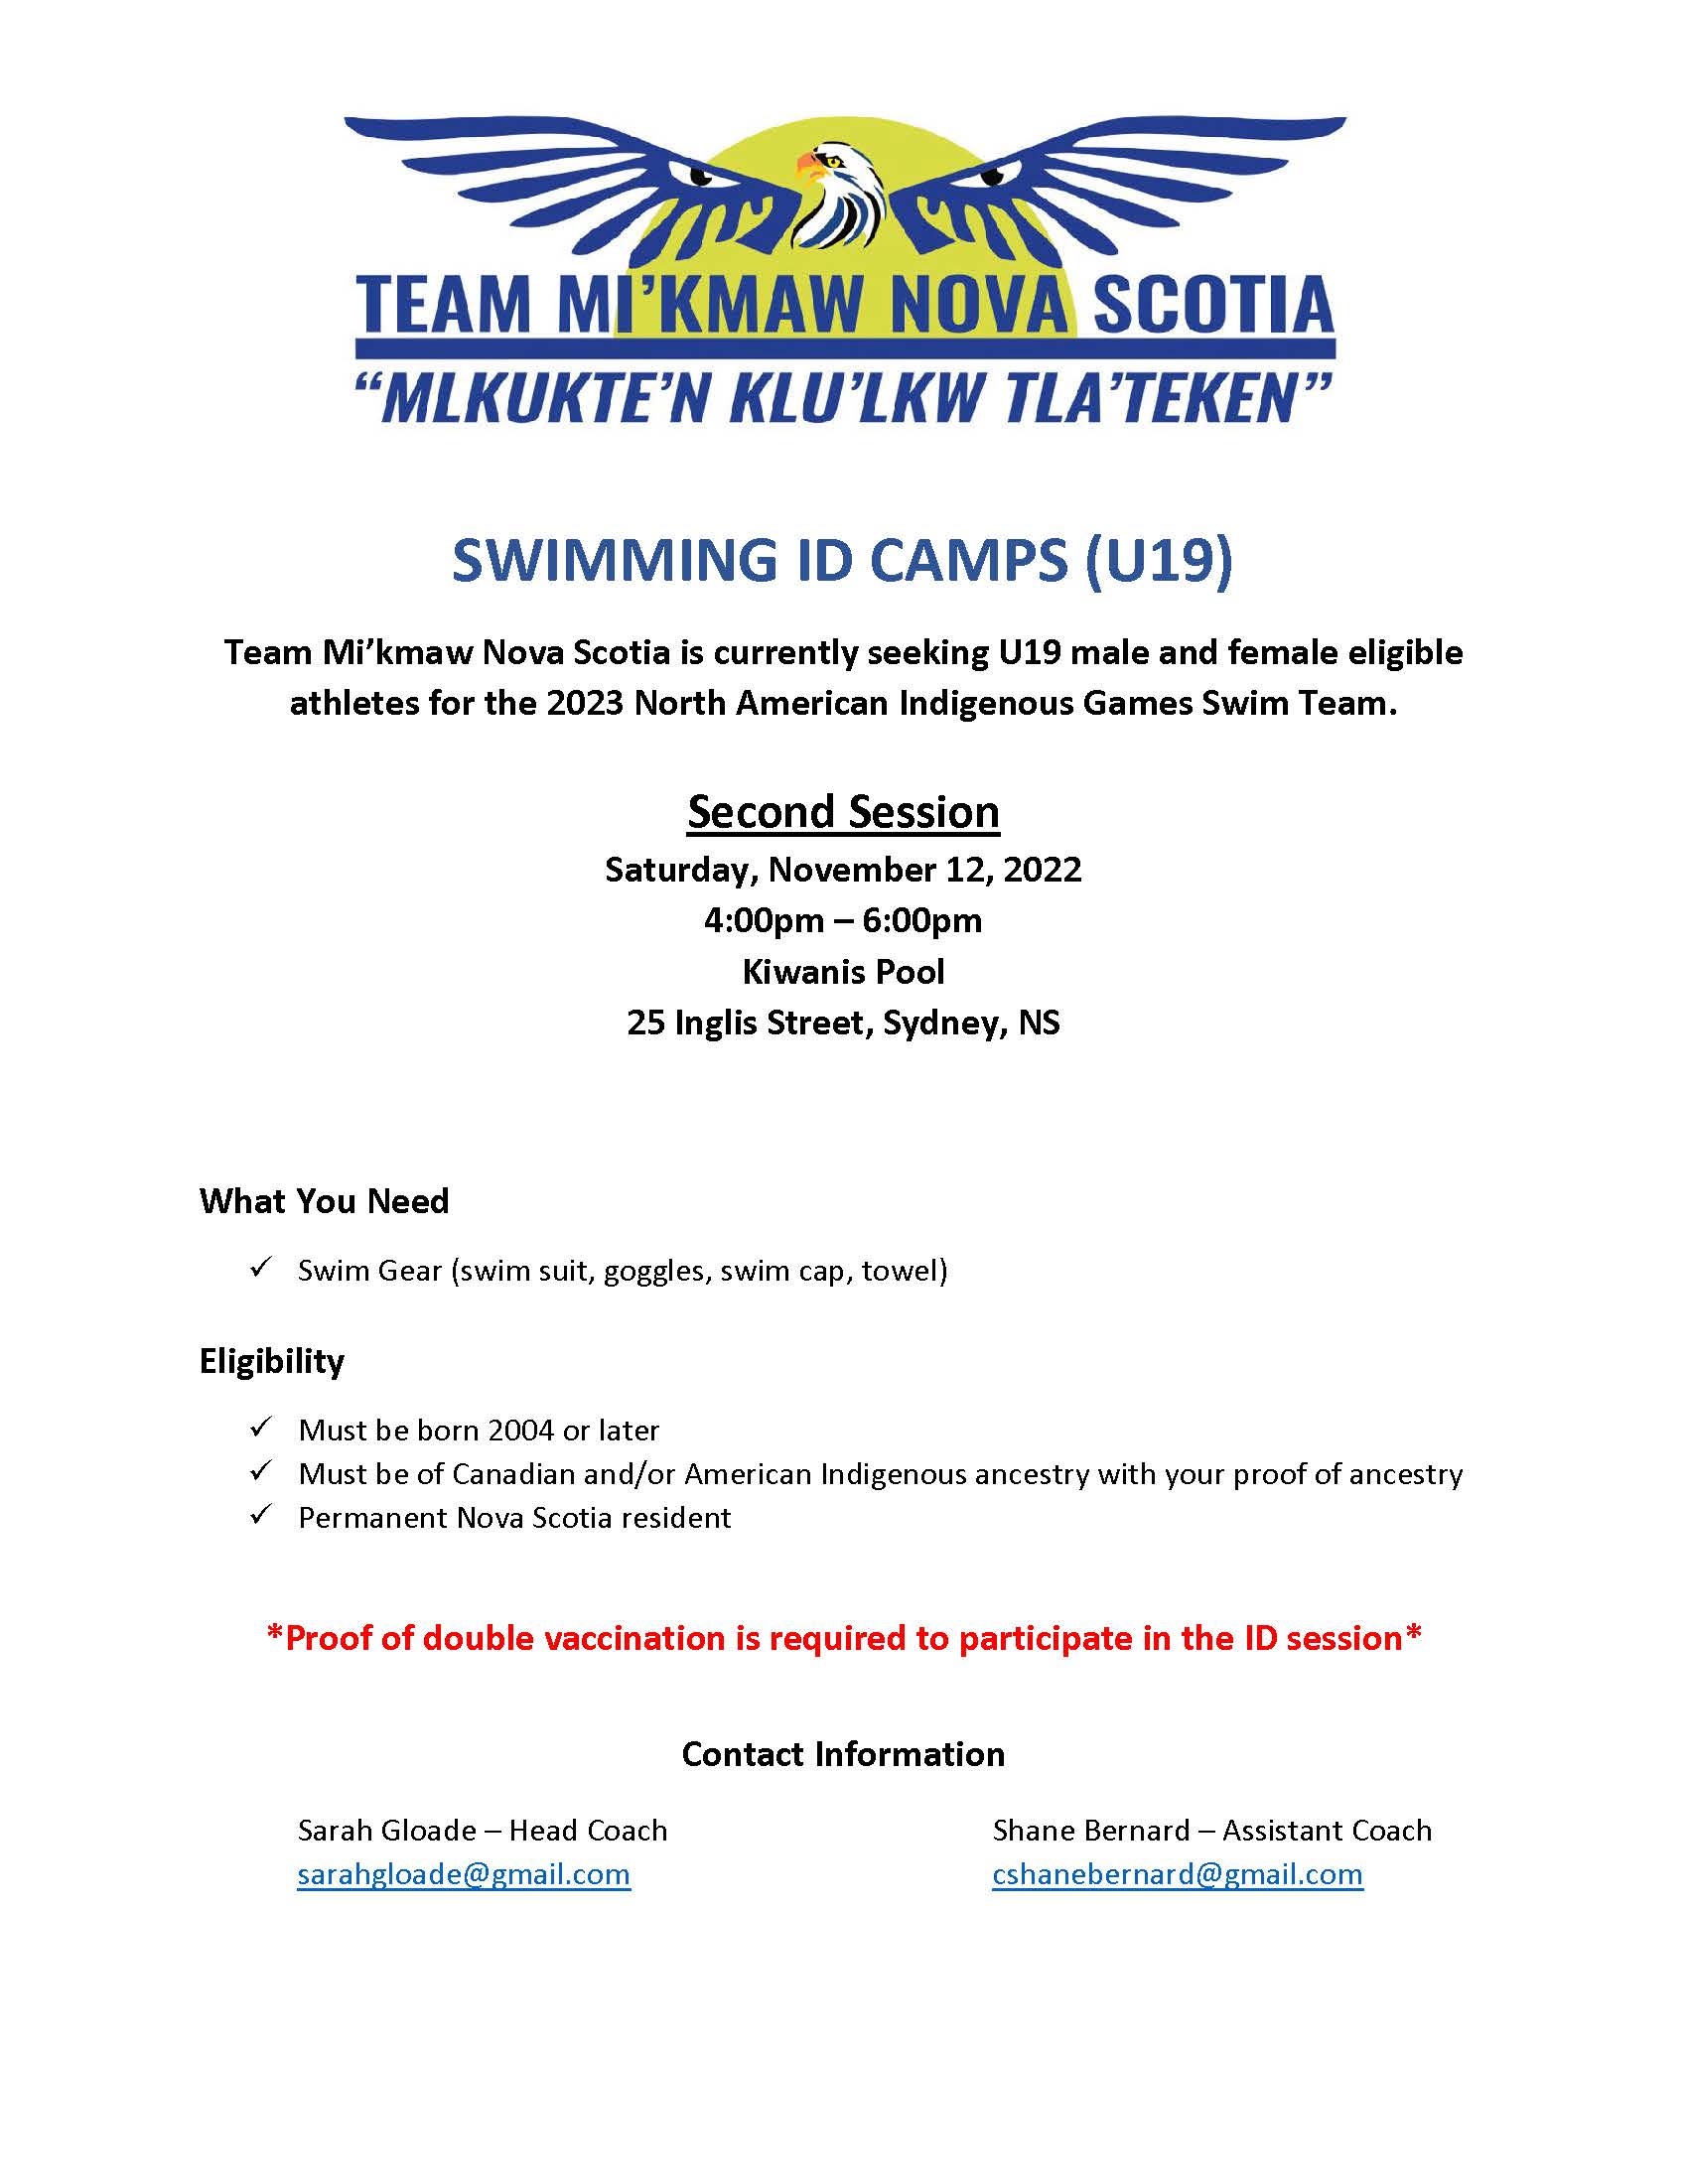 Swimming ID Camp - Nov